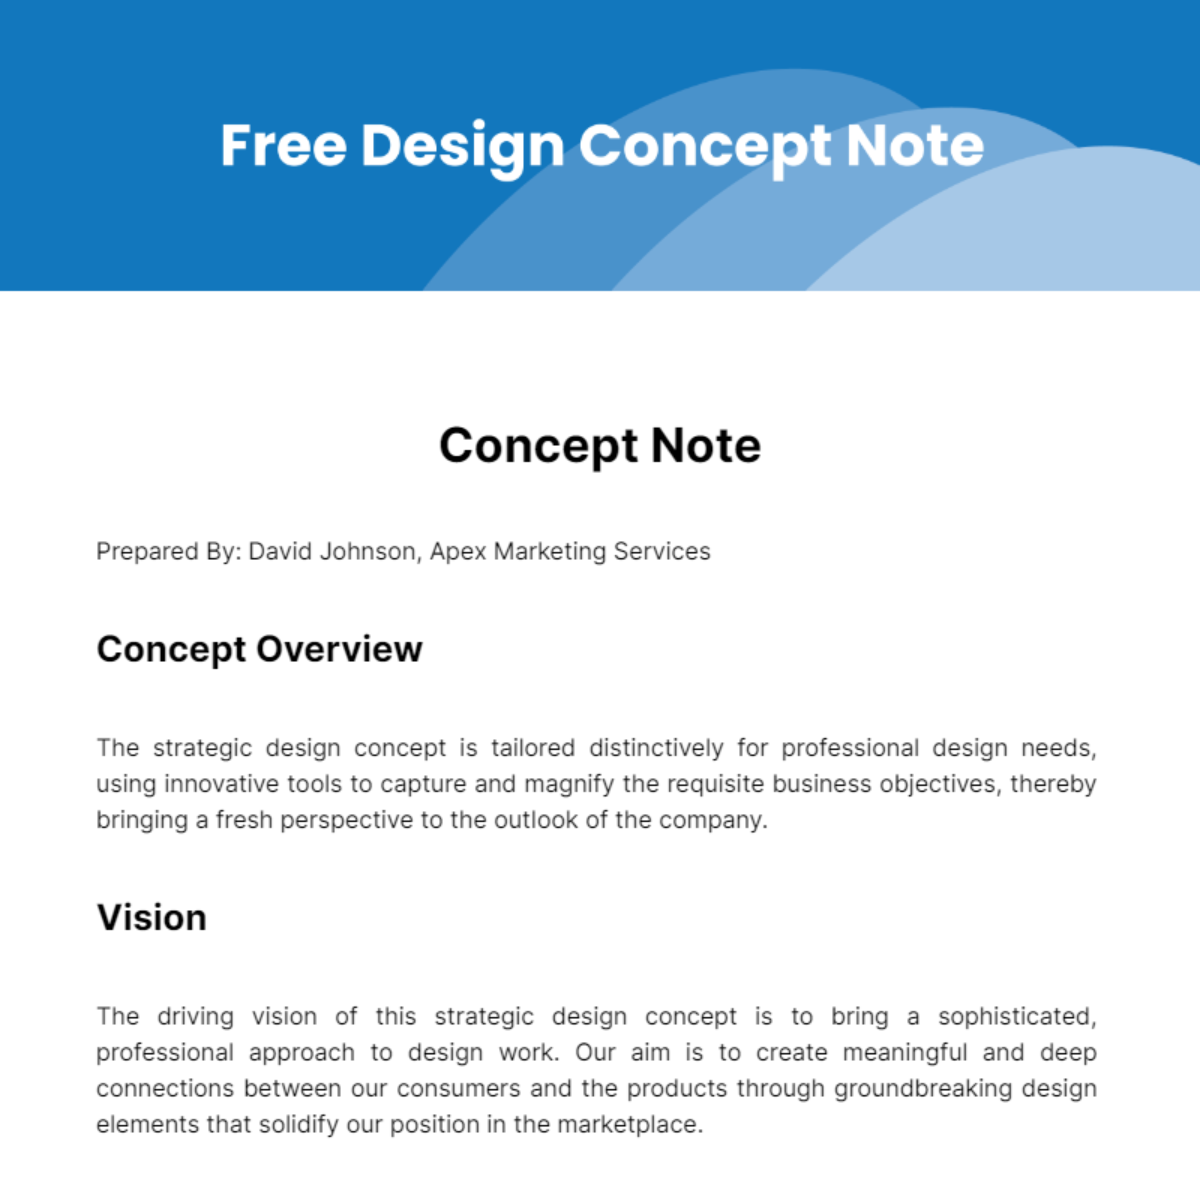 Free Design Concept Note Template